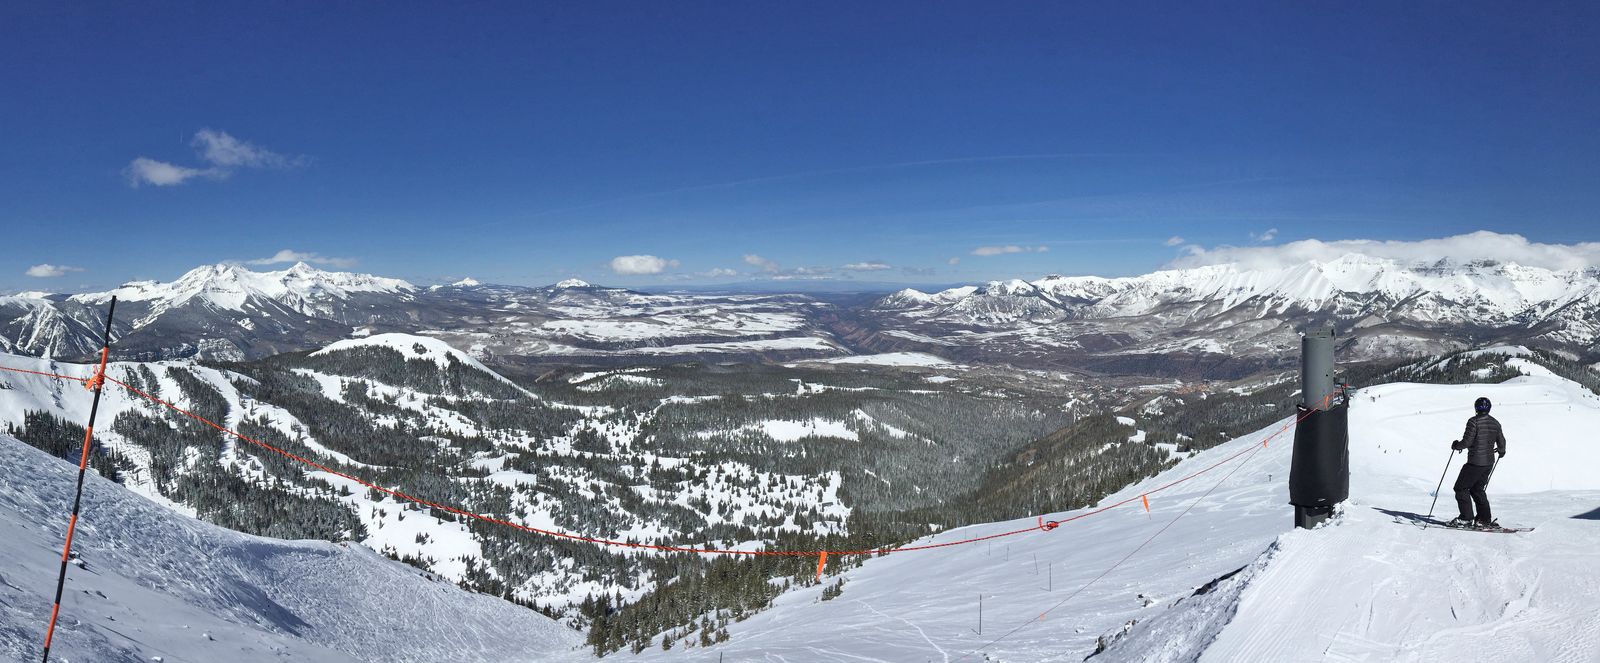 Ein Panorama Bild des Telluride Ski Resort, Colorado